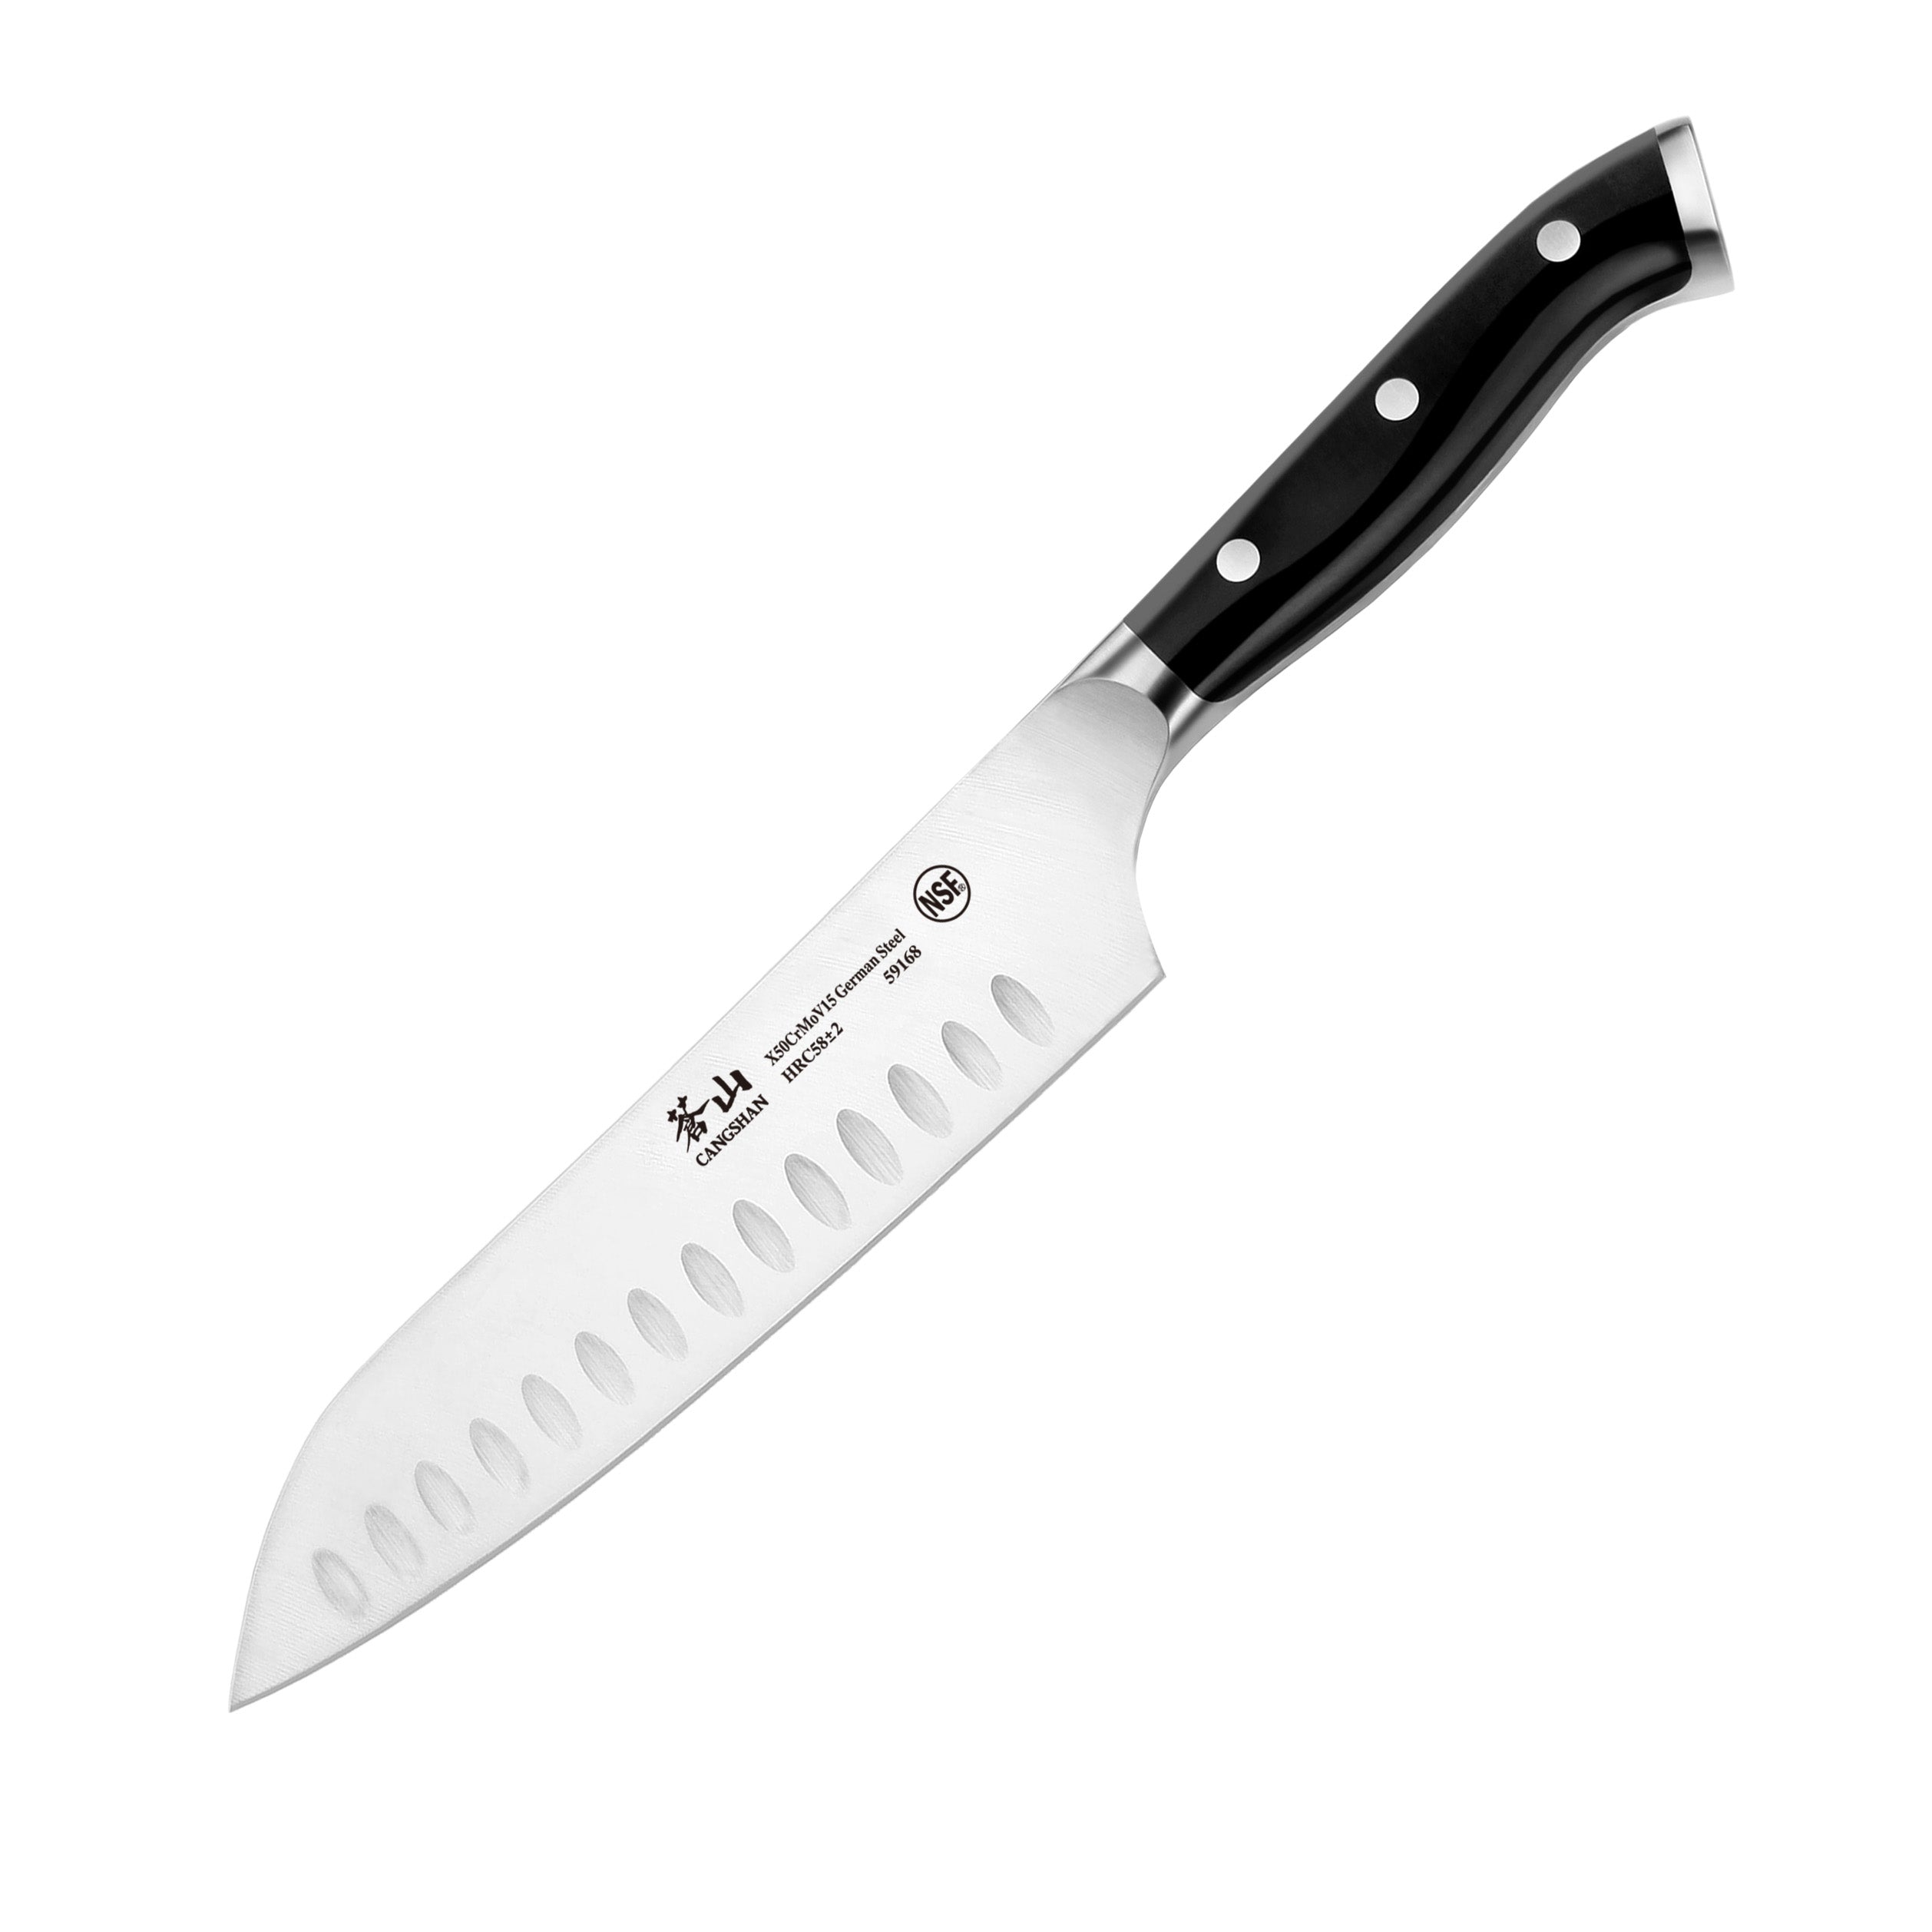 Master Maison Santoku Knife Set - 7 Premium German Stainless